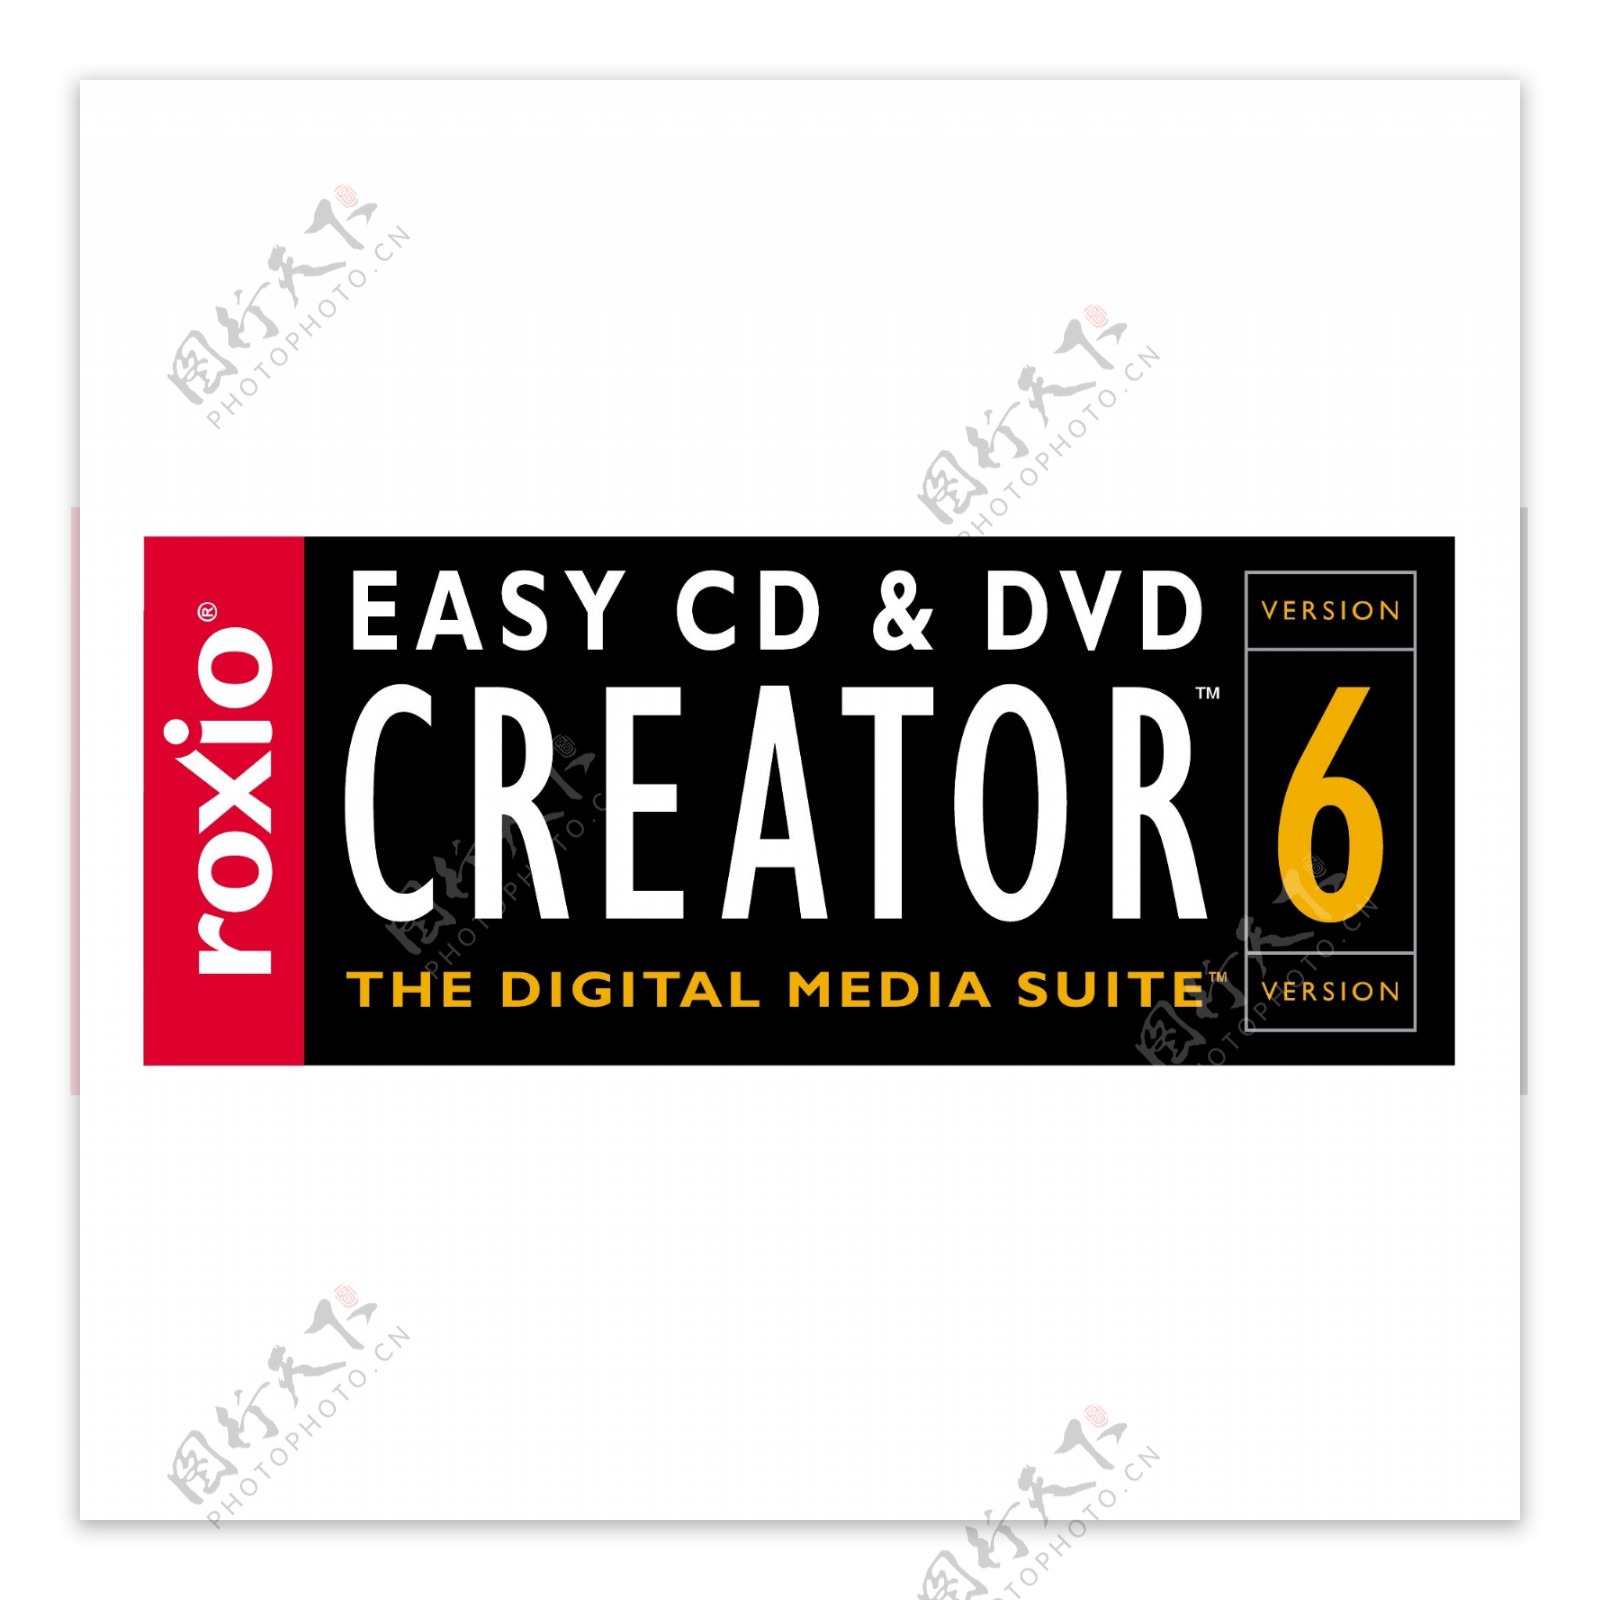 EasyCDCreator6dvd